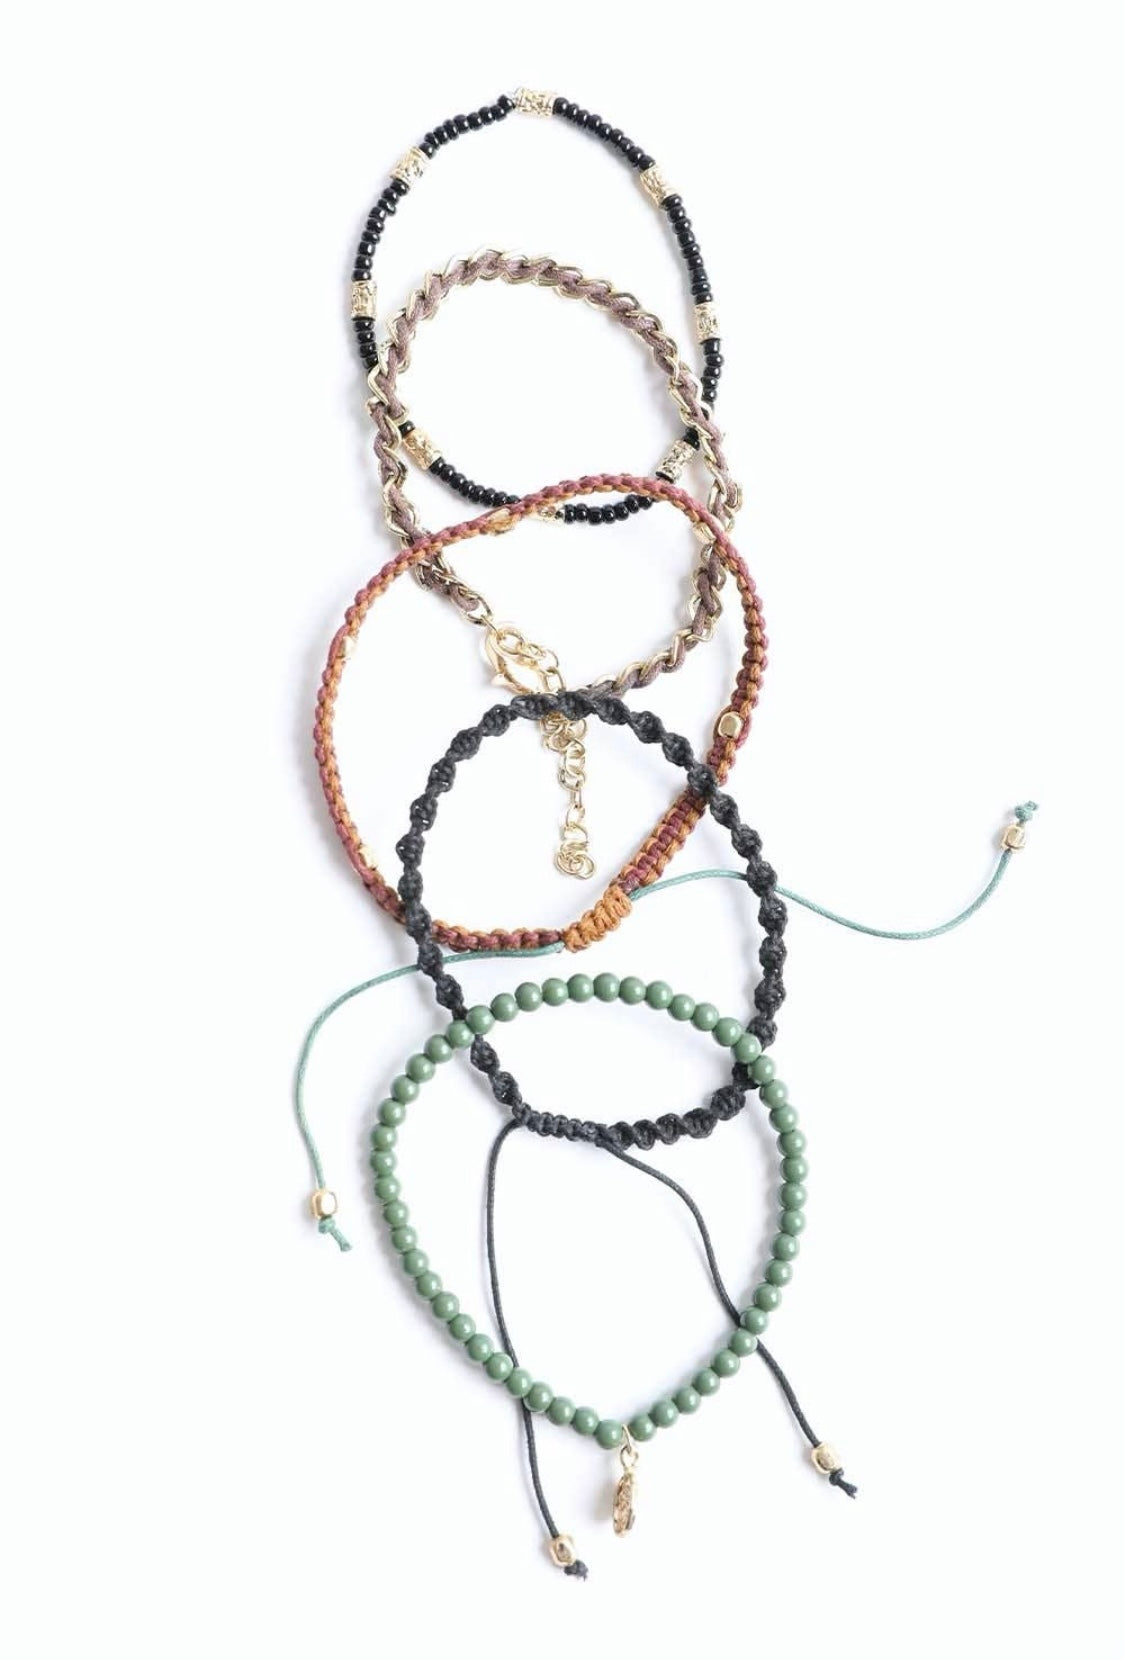 Woven Bead Stackable Cord Bracelets